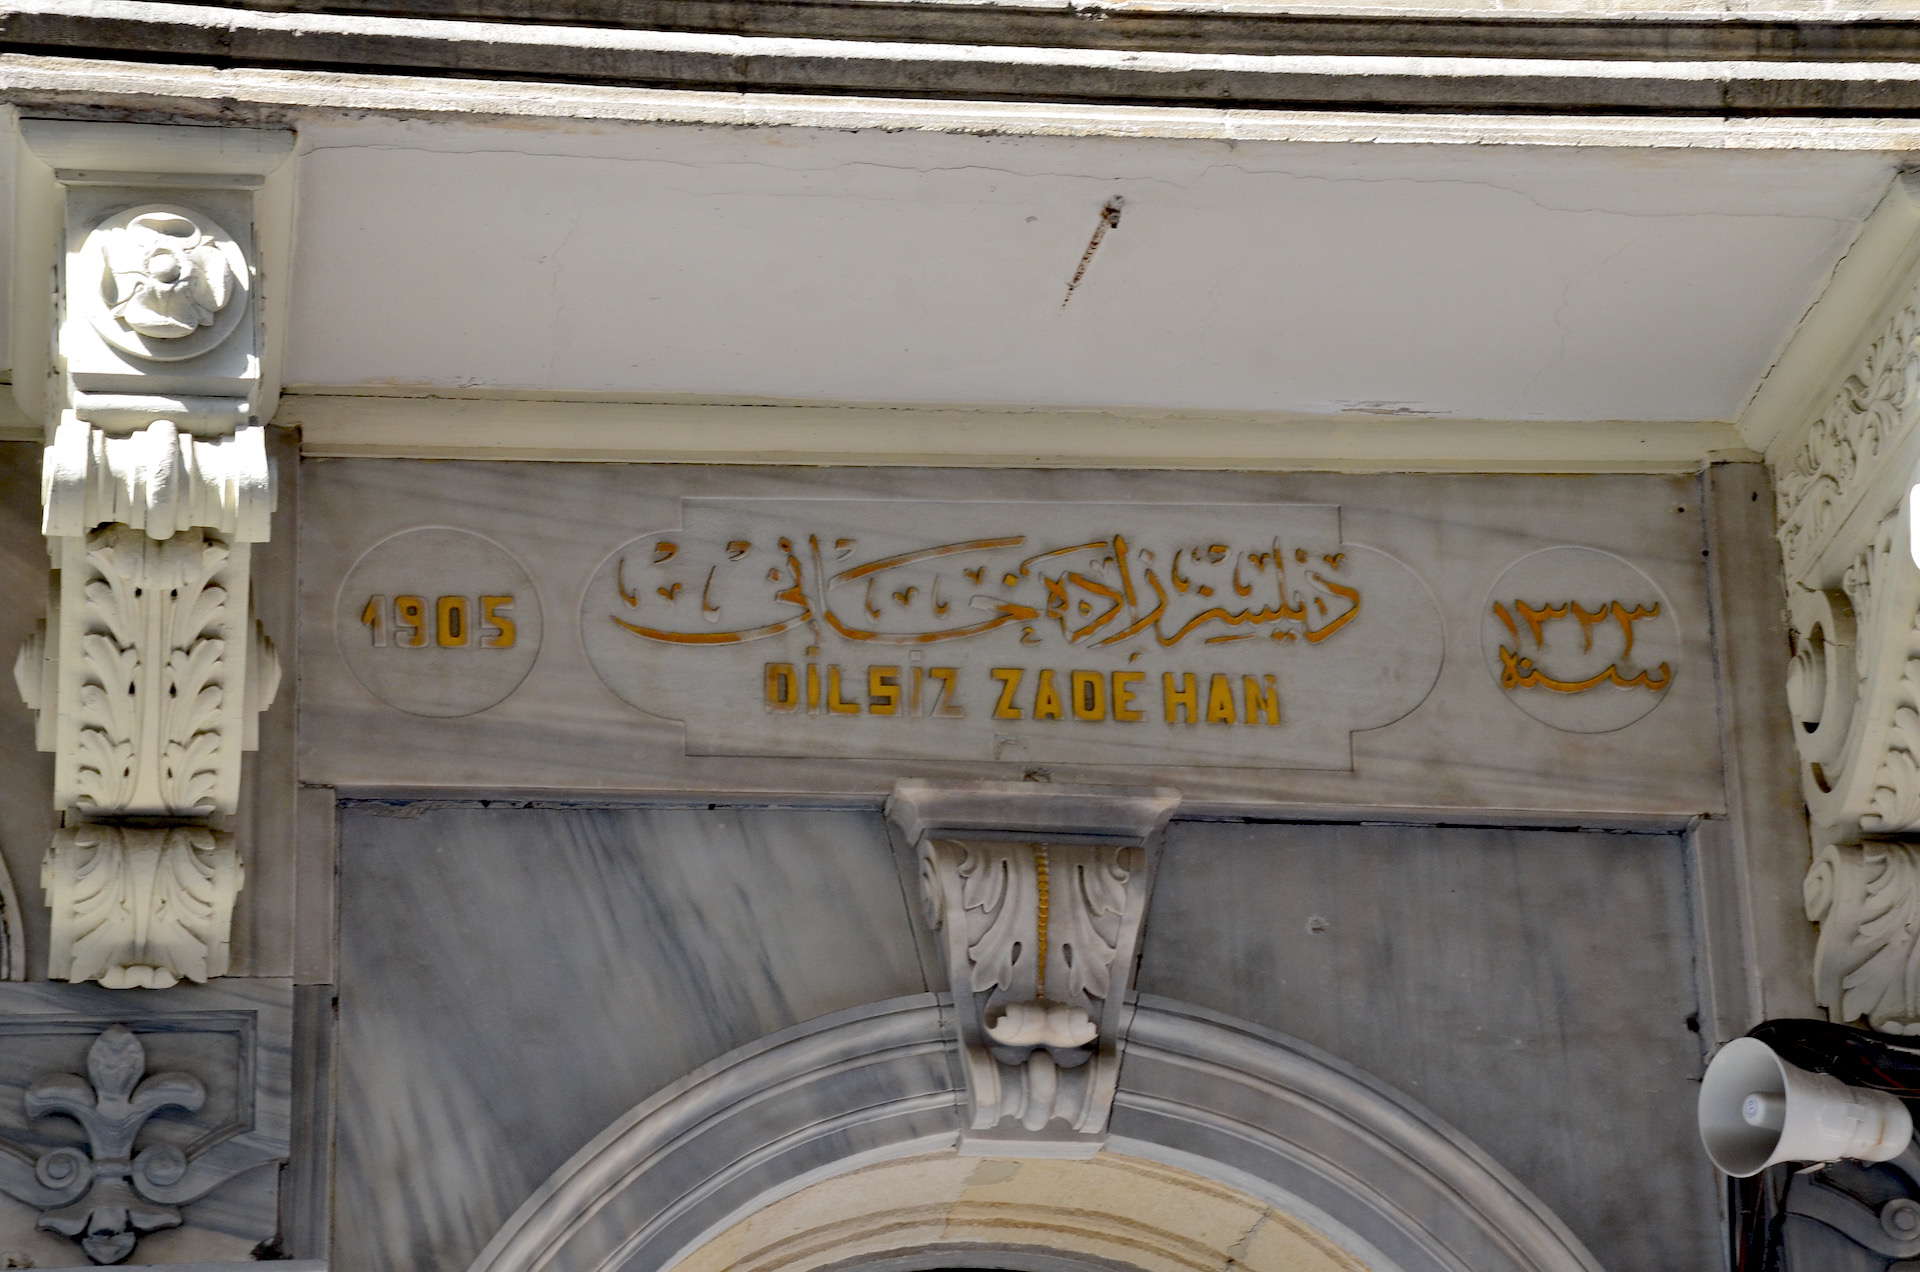 Inscription above the entrance to Dilsiz Zade Han